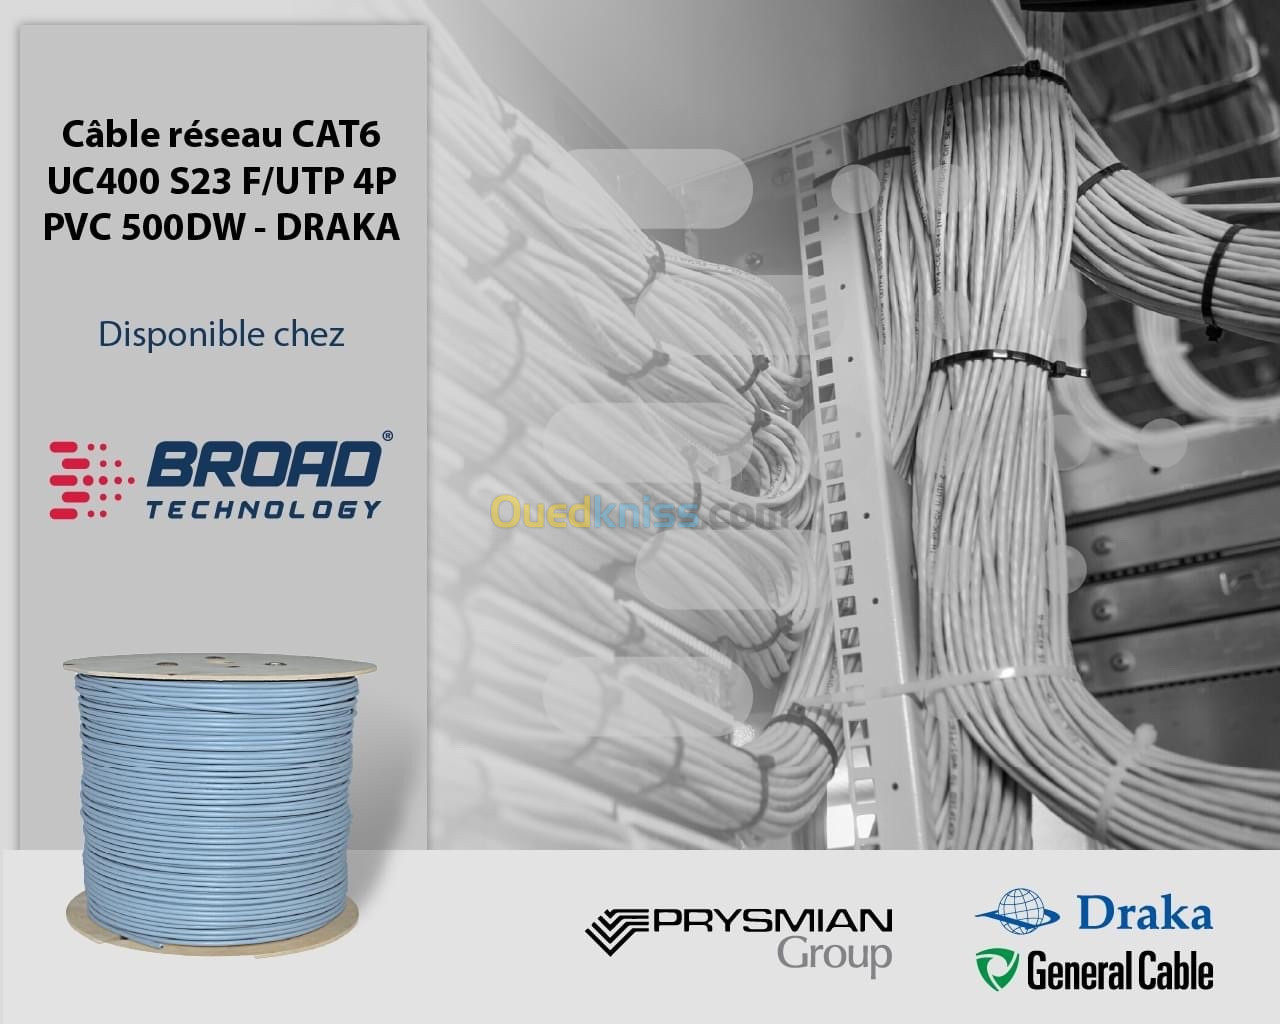 CABLE RESEAU CAT6 UC400 S23 F/UTP 4P PVC 500DW - DRAKA